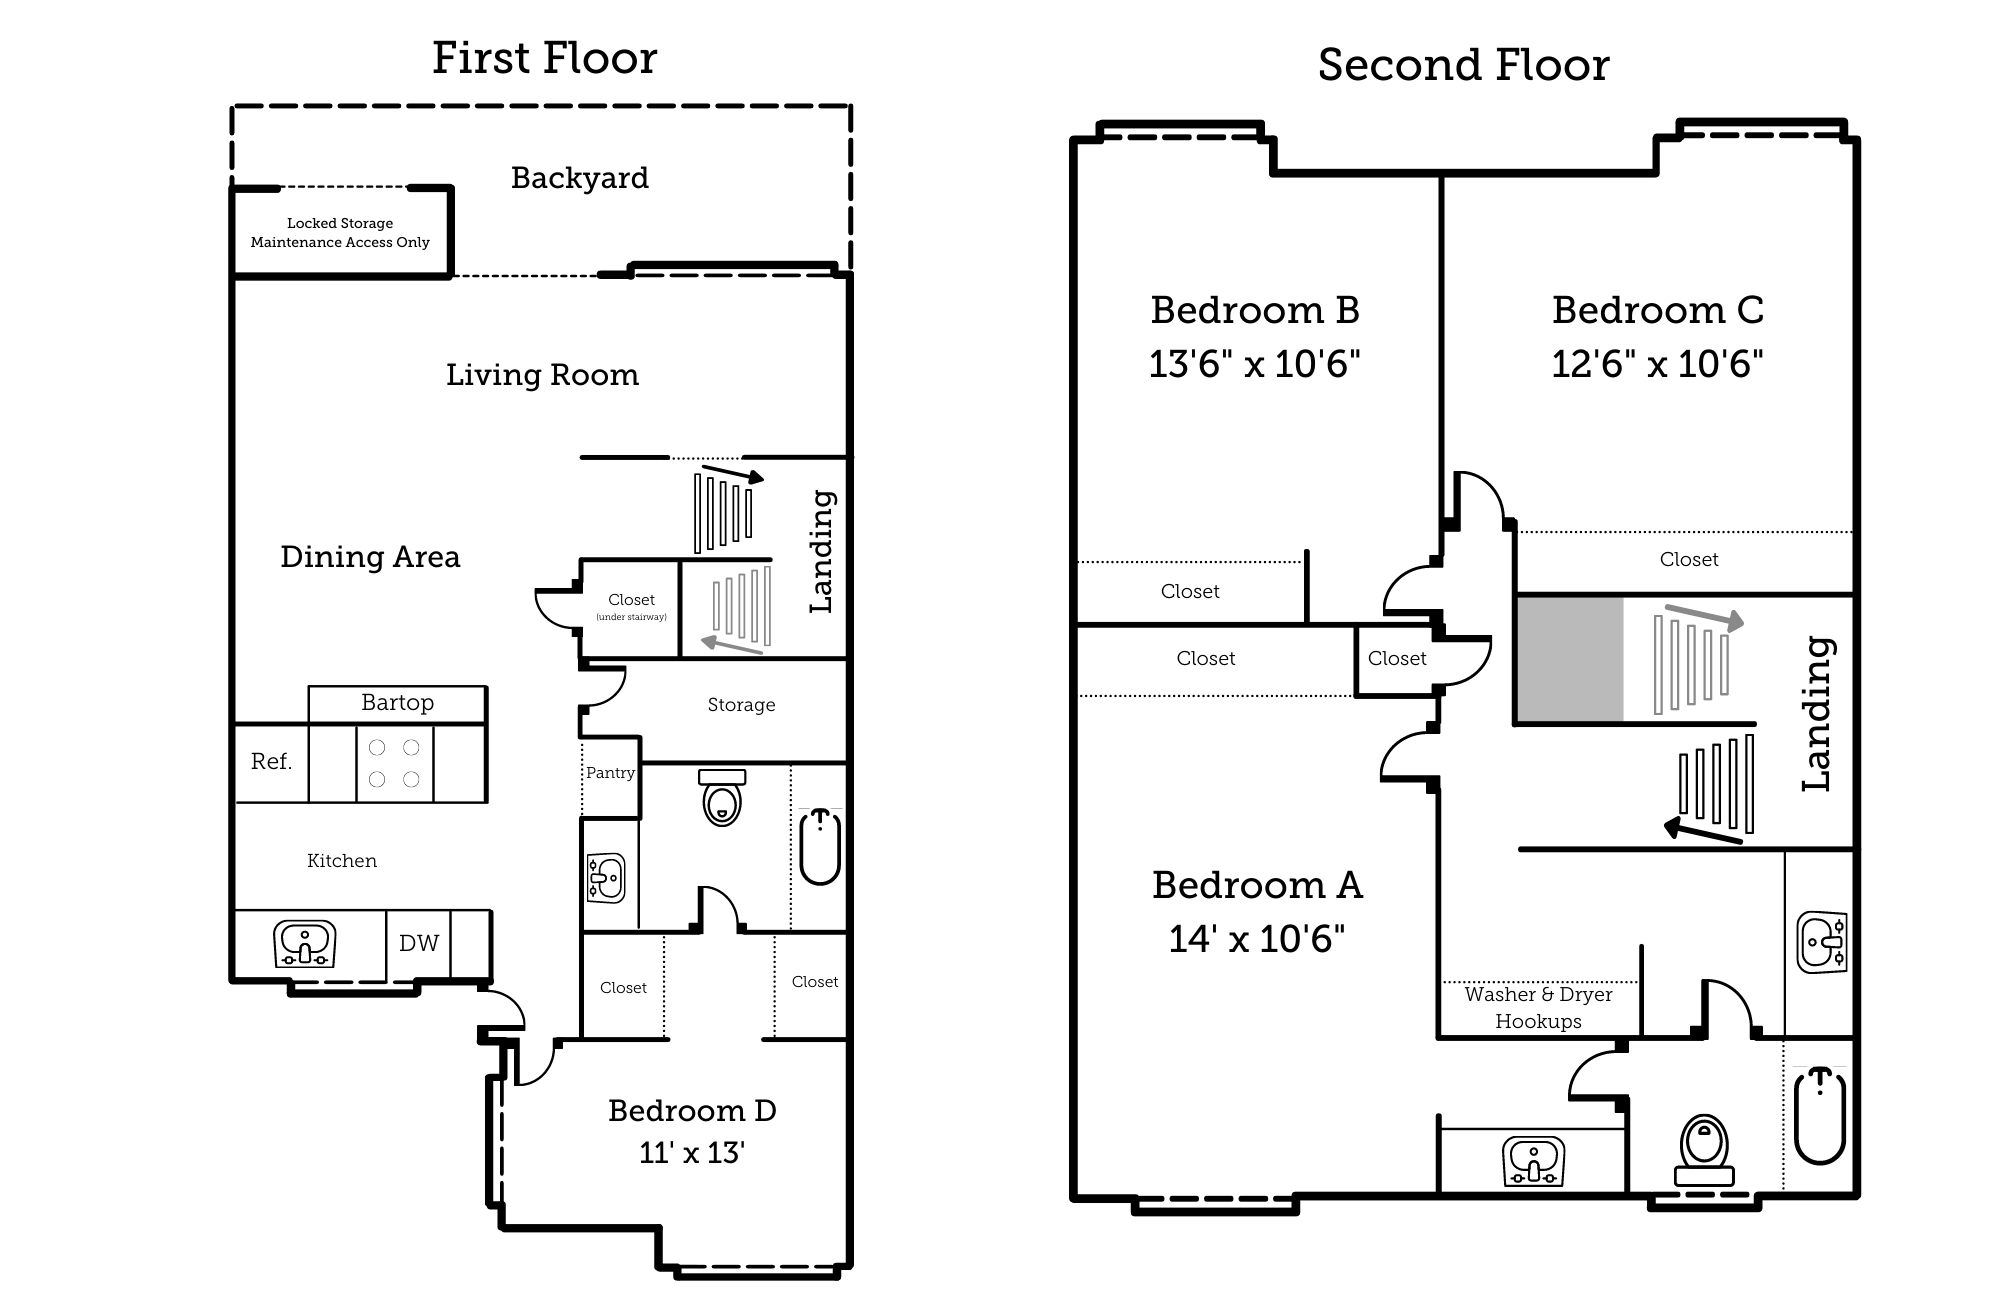 4 bedroom Individual Lease Program Floor Plan